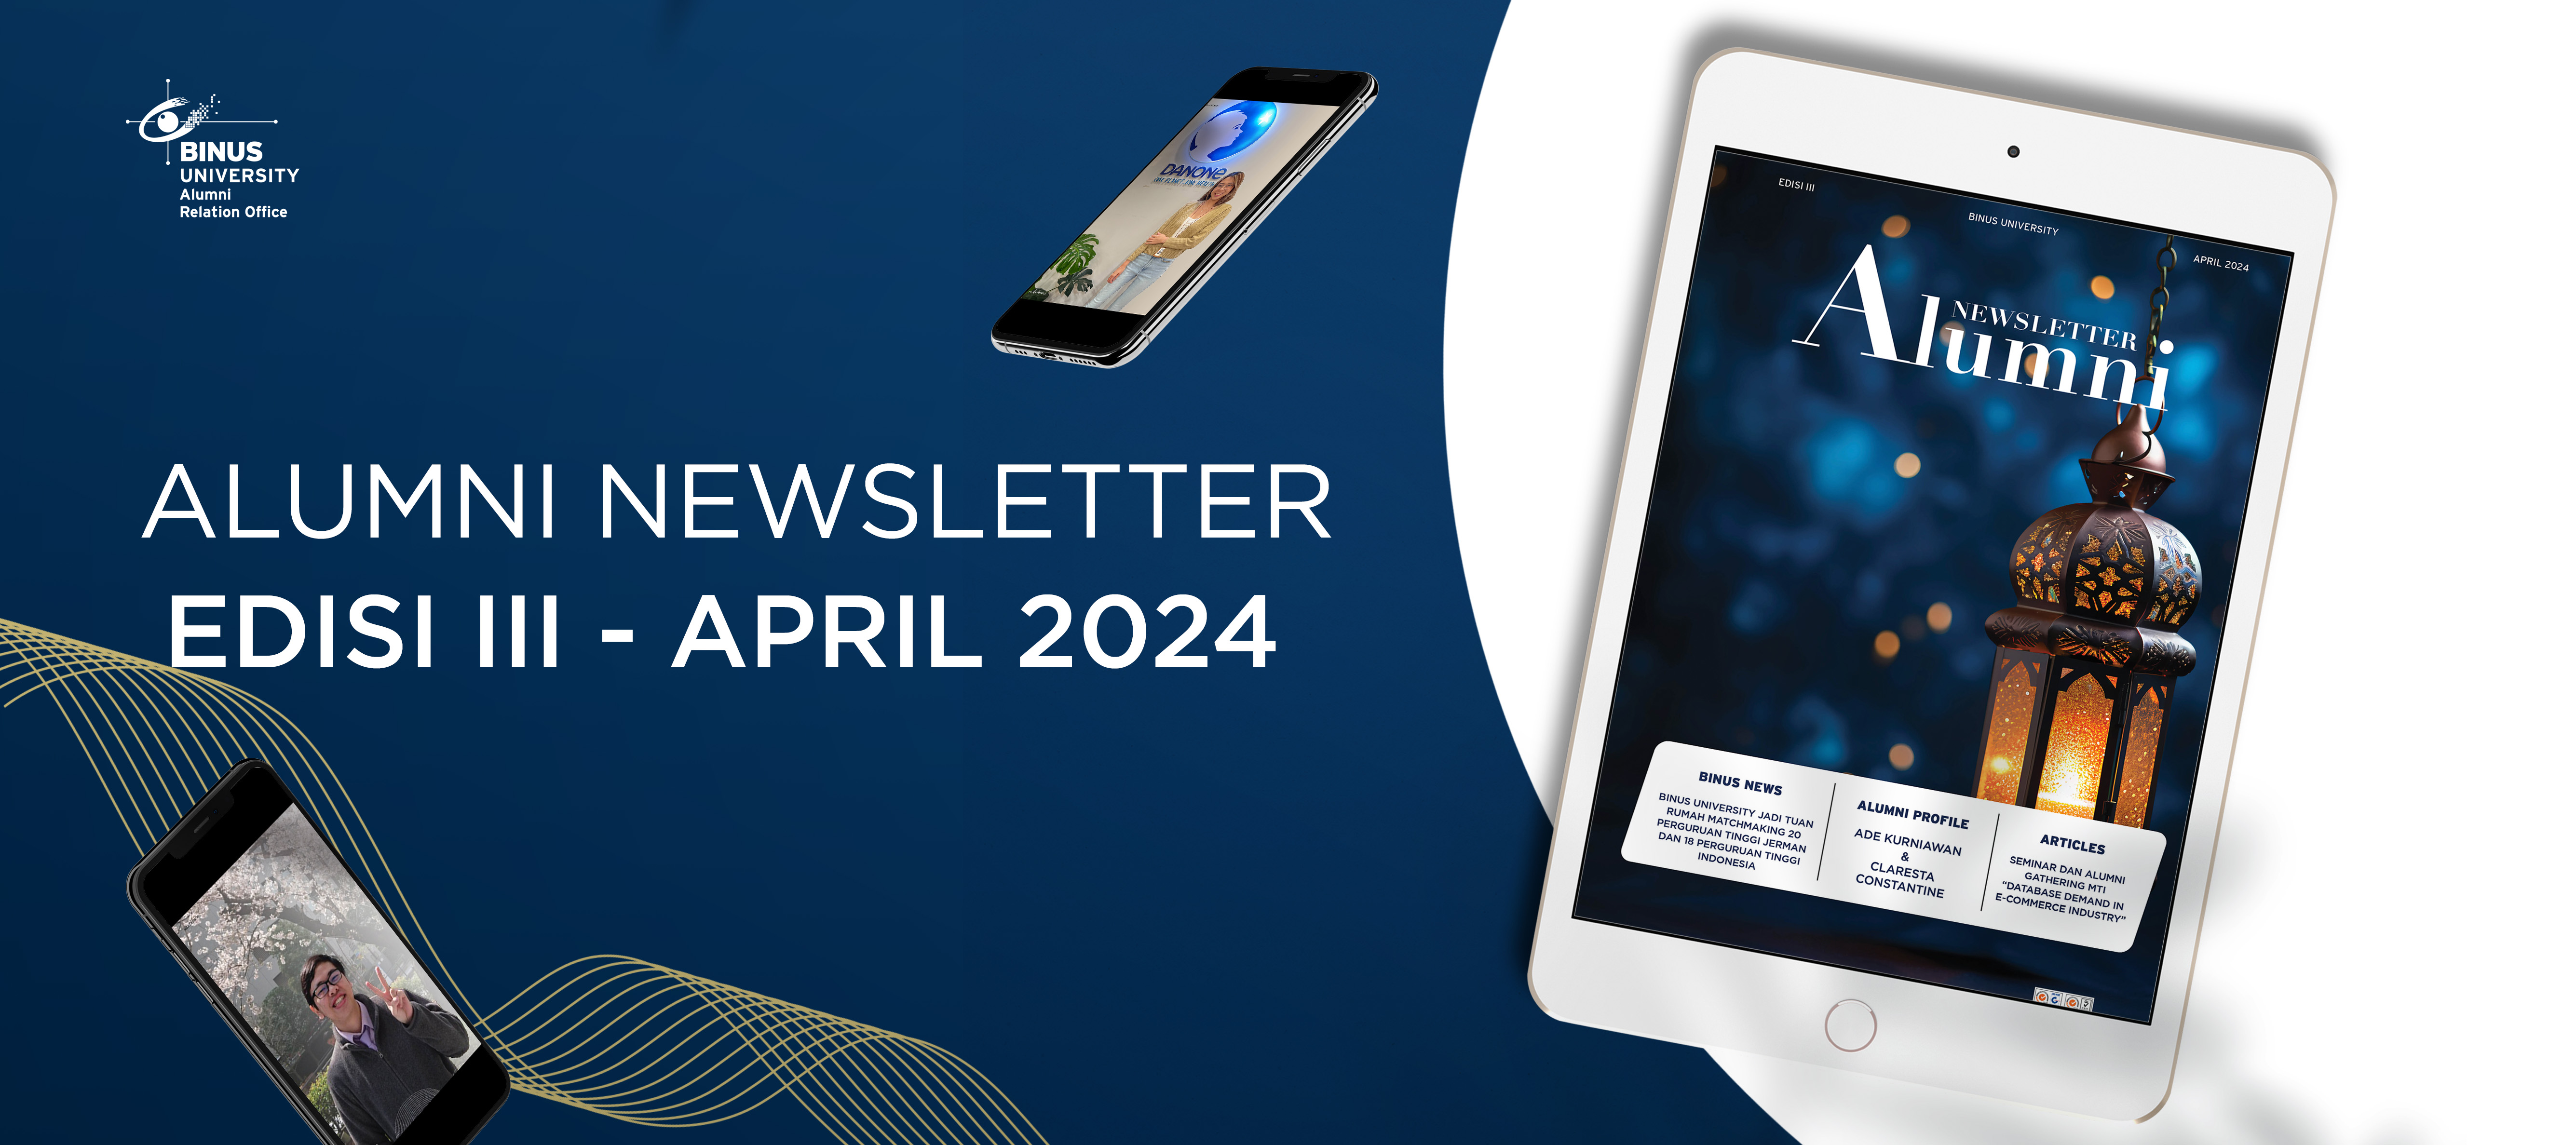  Newsletter Edisi III - April 2024